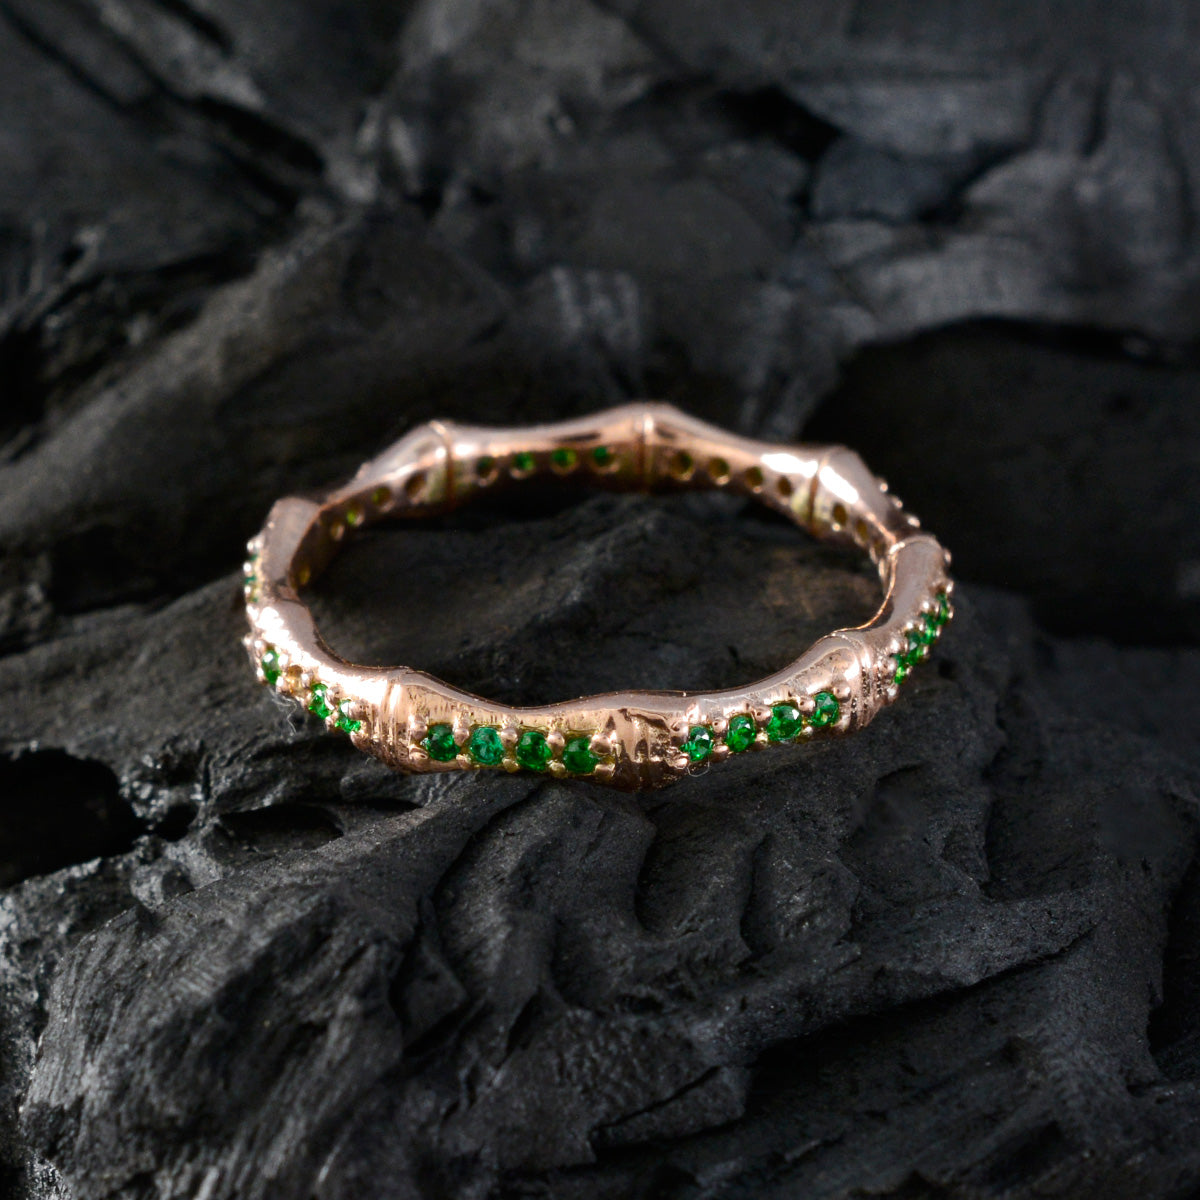 Riyo Choice zilveren ring met roségouden smaragdgroene CZ-steen ronde vorm Prong-instelling aangepaste sieraden Vaderdagring